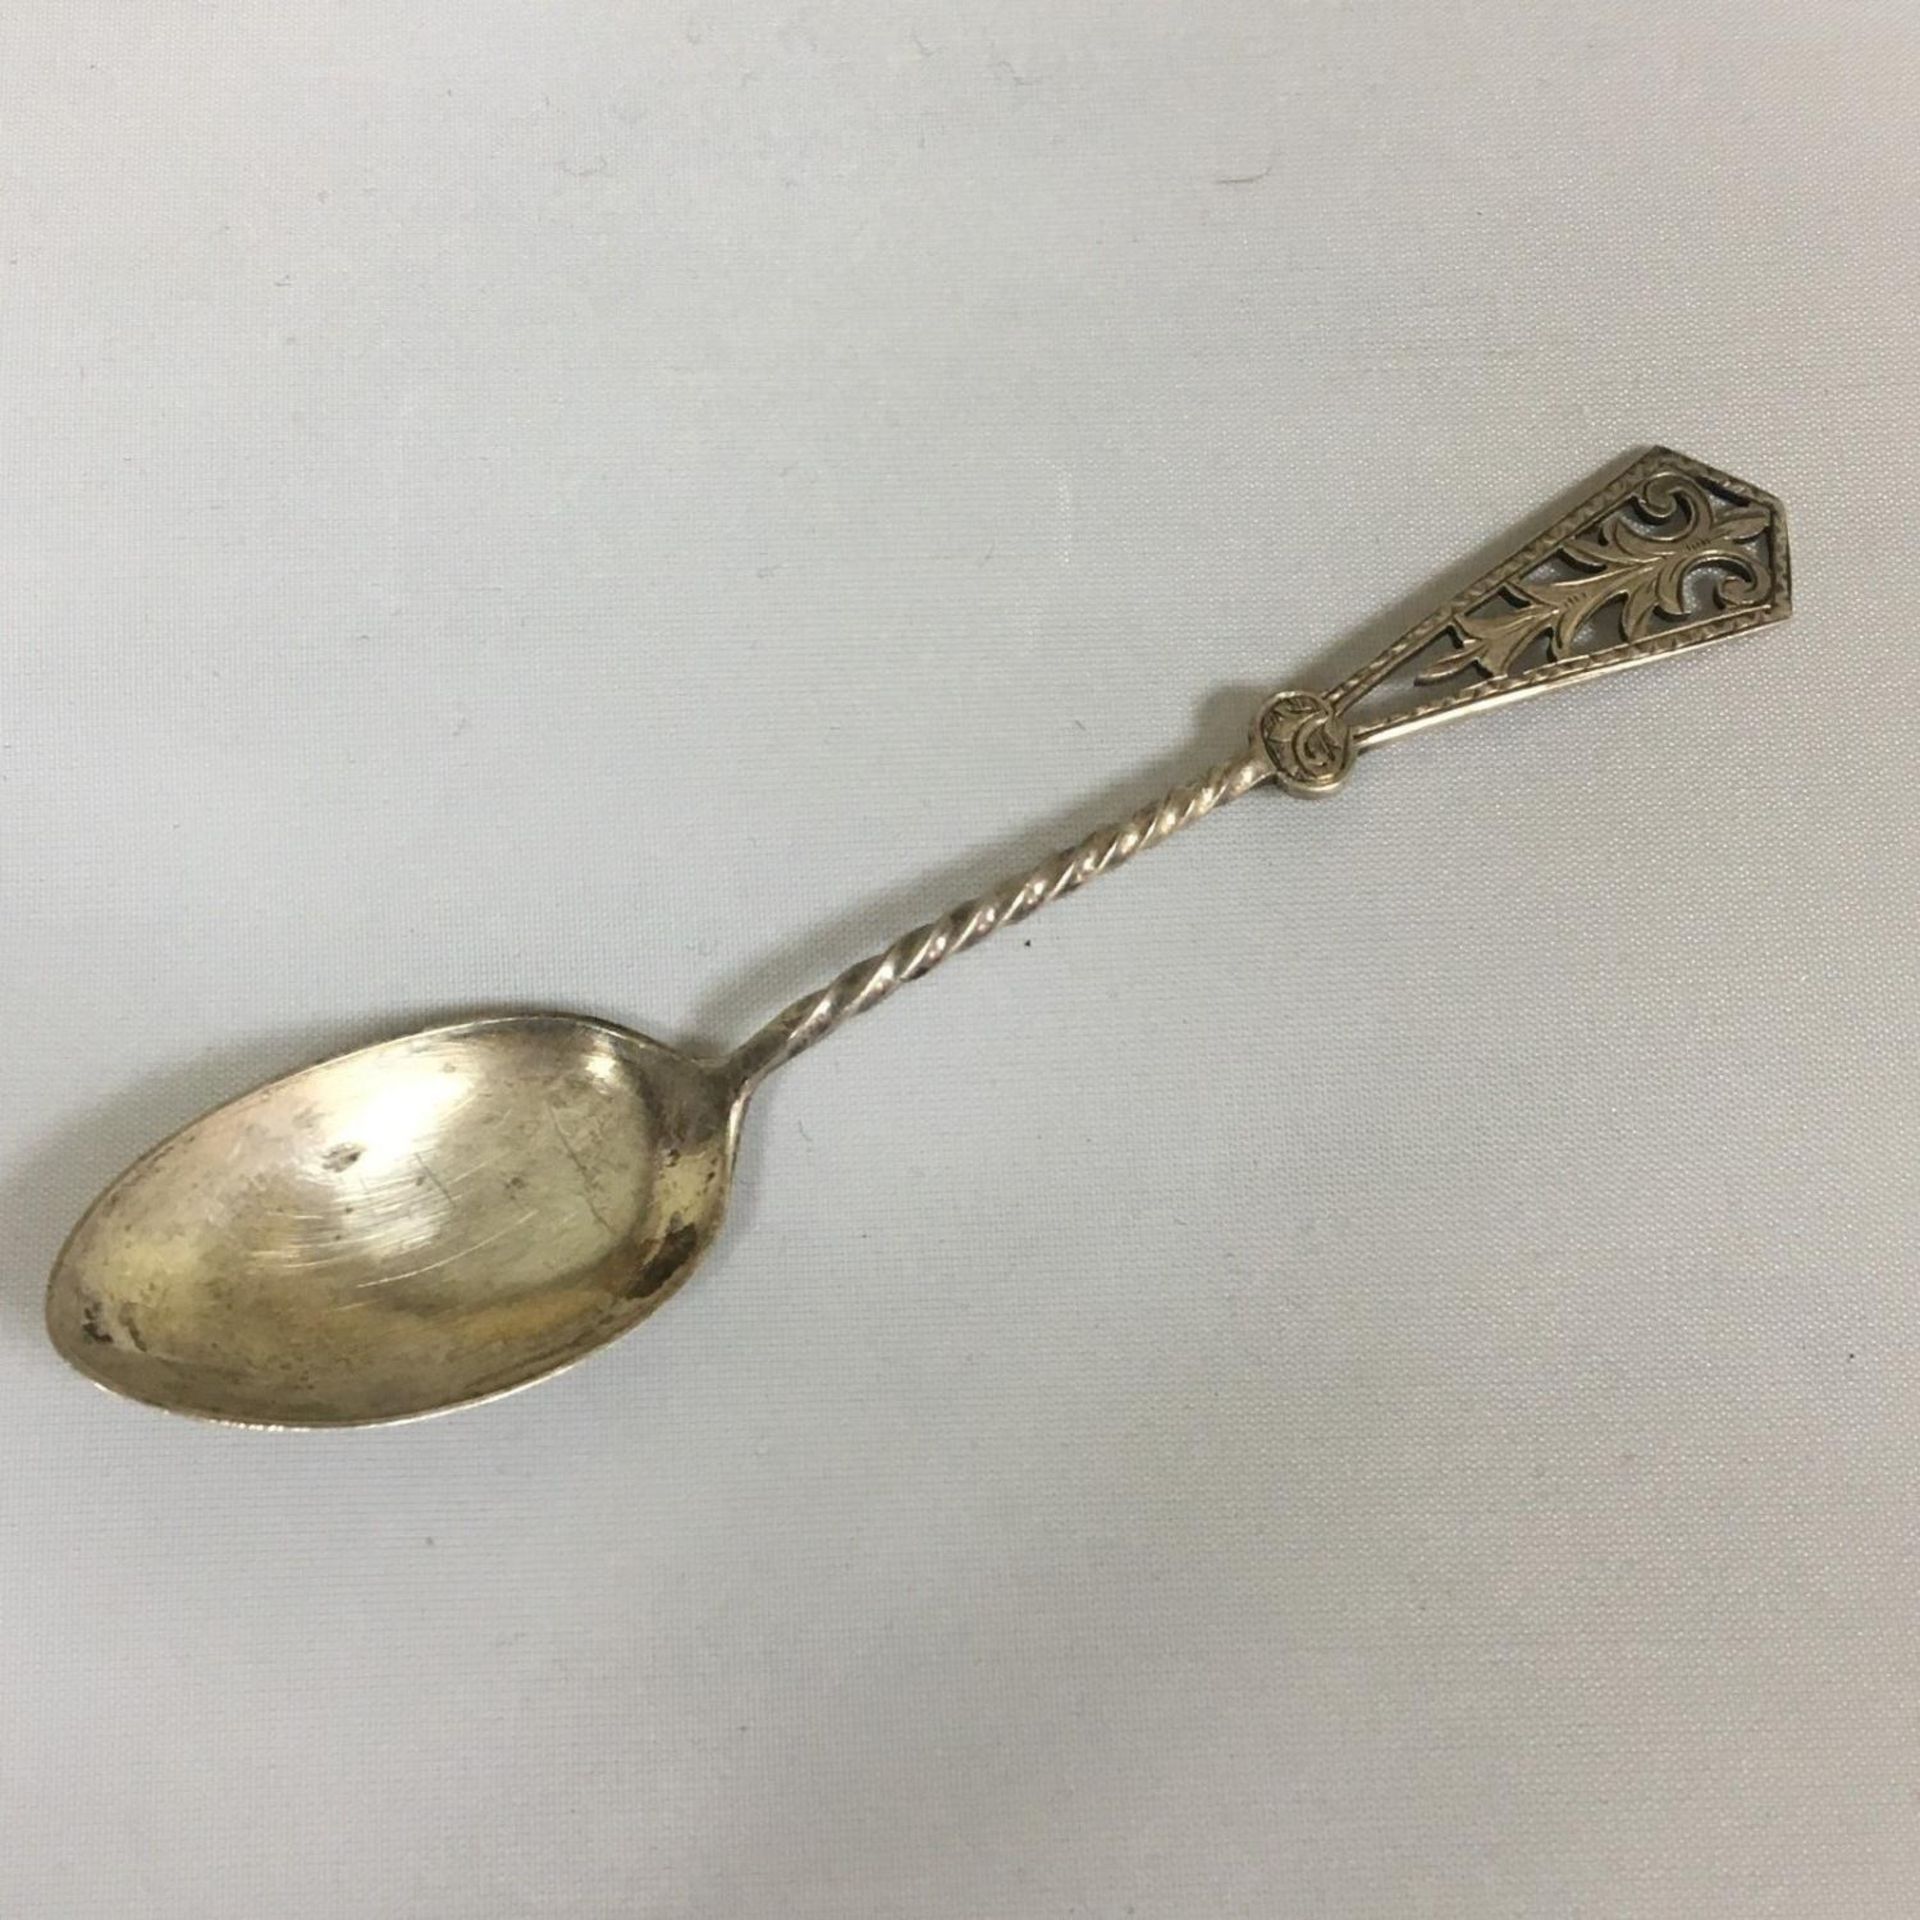 Art Nouveau solid sterling HM silver twist stem teaspoon with ornate finial